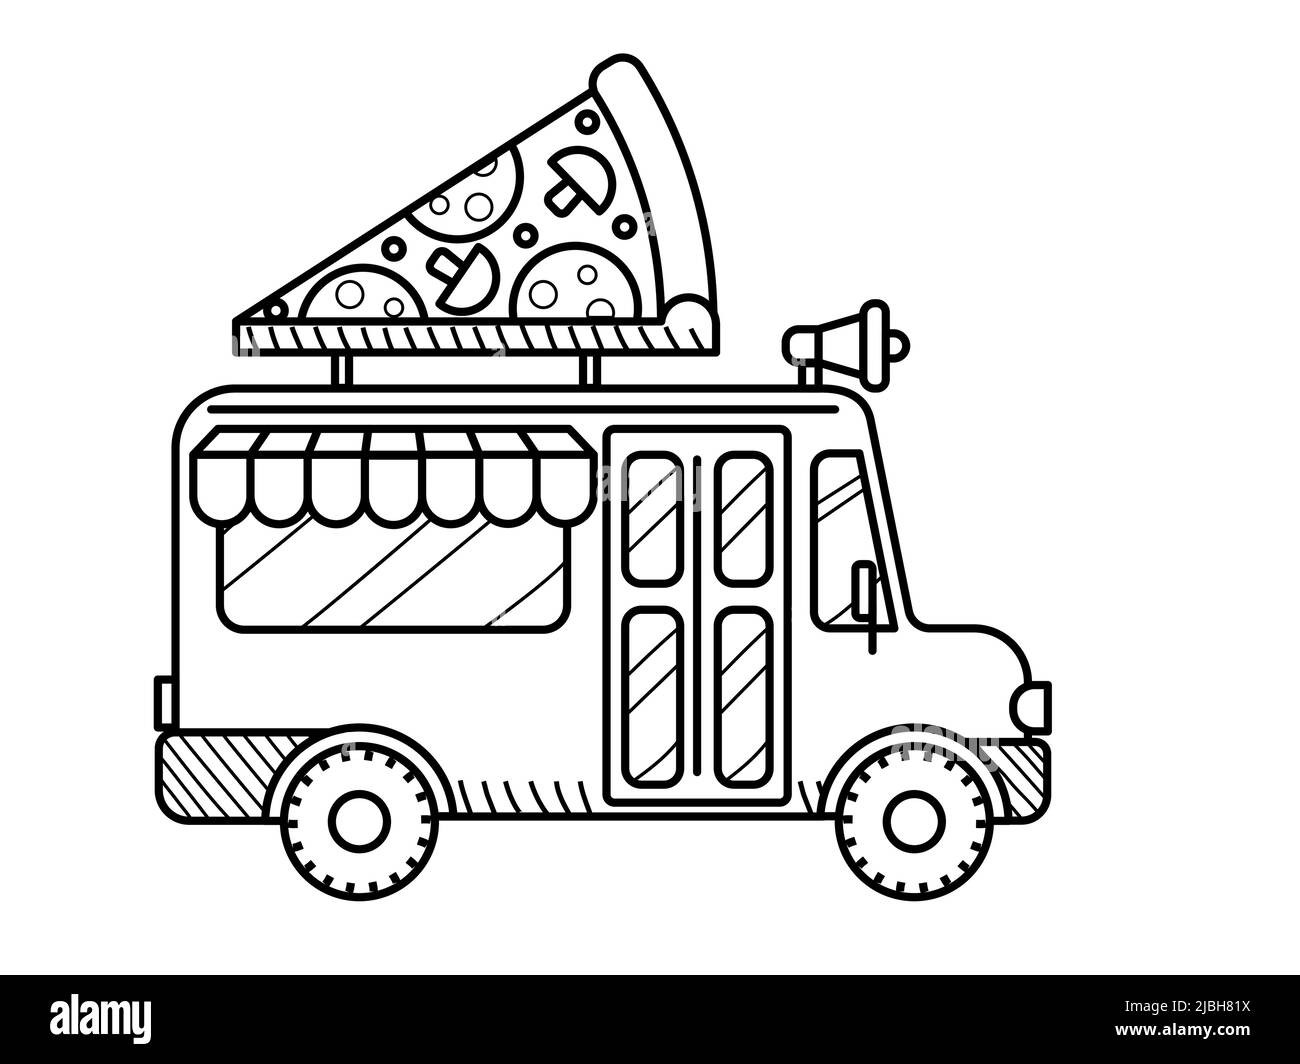 Pizza van coloring page. Cartoon food truck Stock Vector